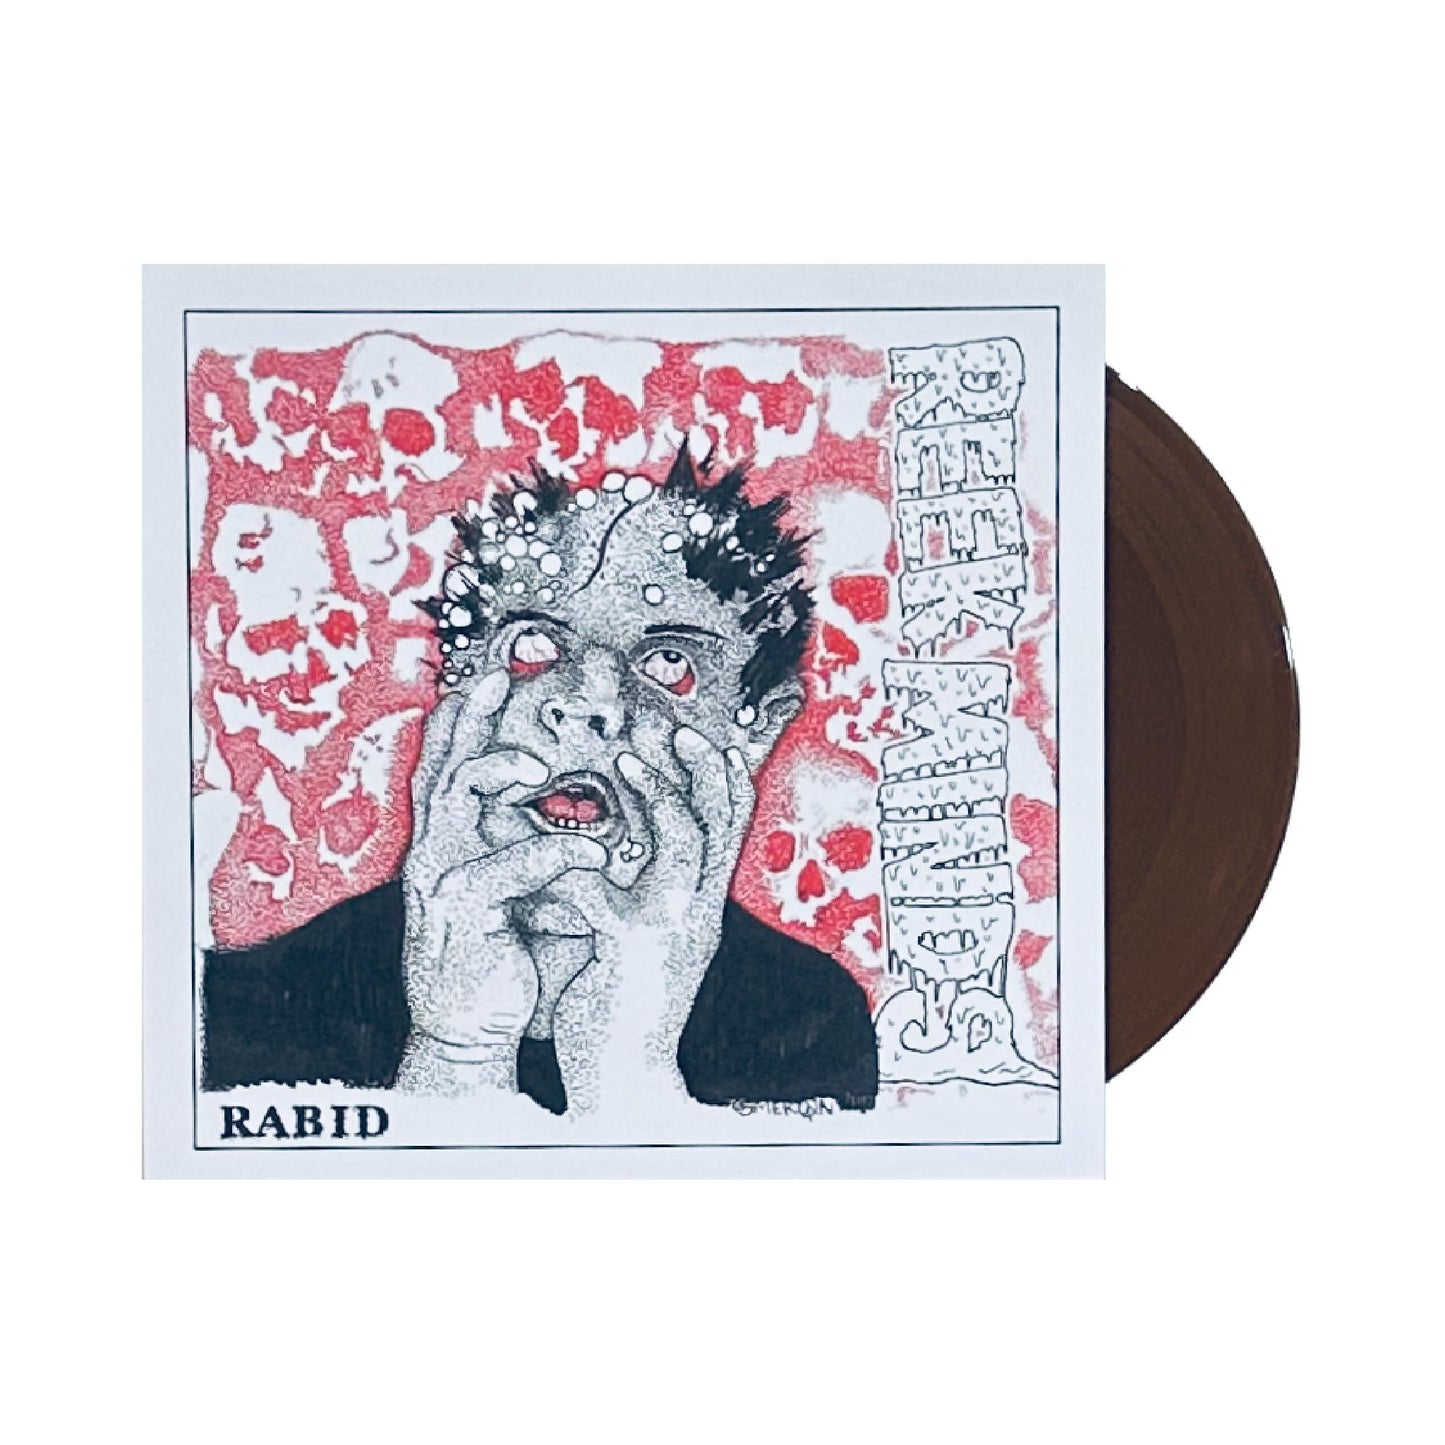 Reek Minds - Rabid 7" EP (color vinyl)